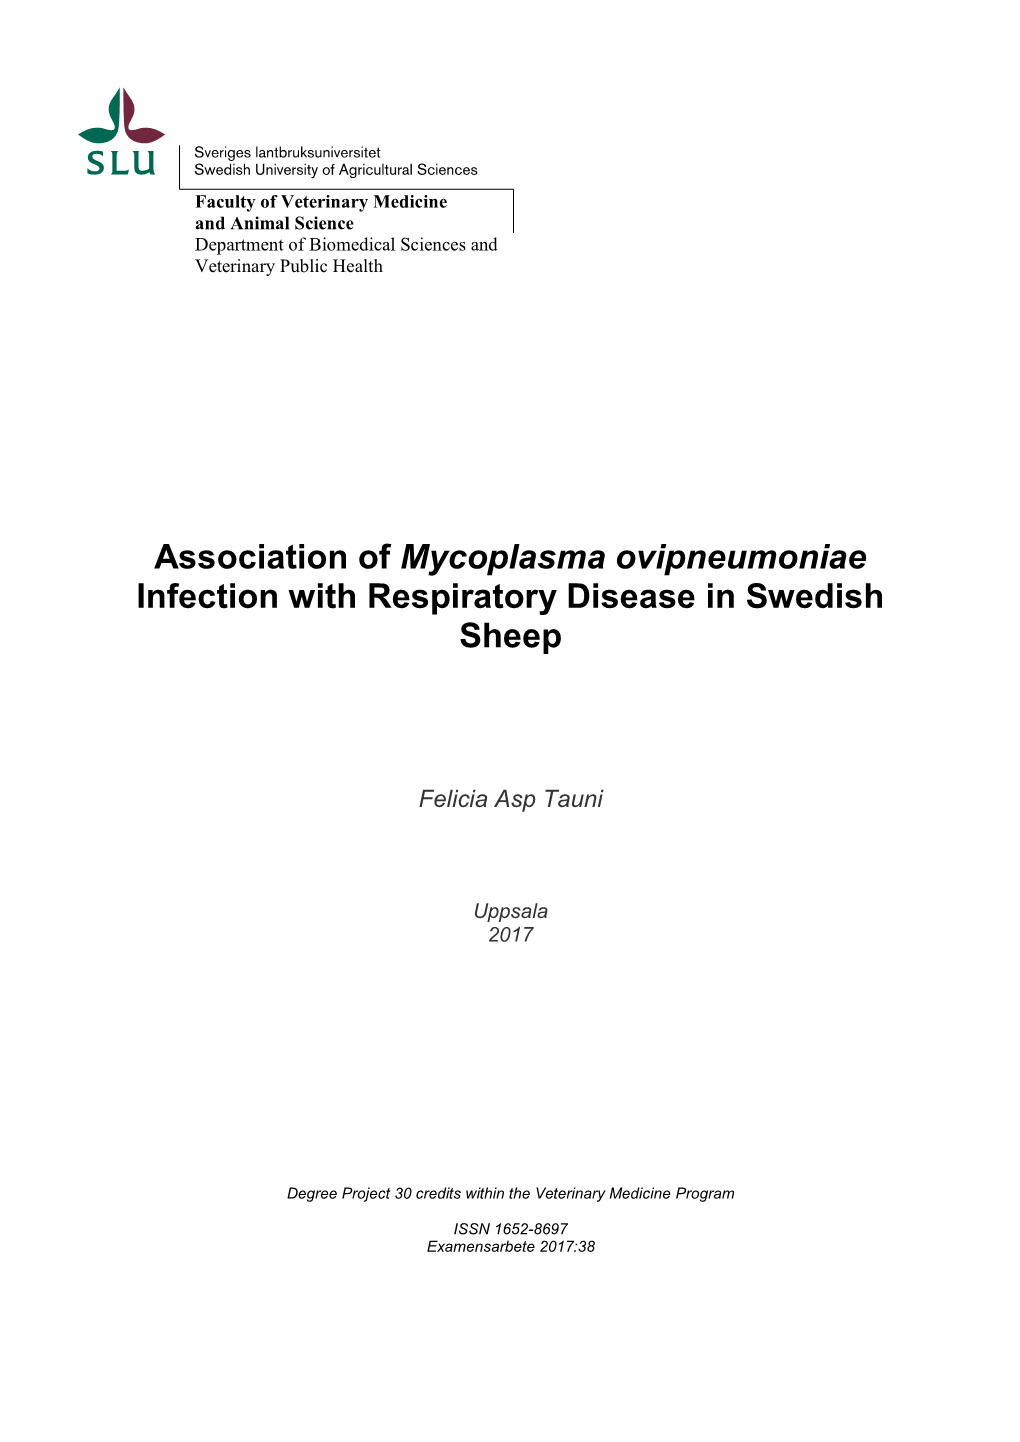 Association of Mycoplasma Ovipneumoniae Infection with Respiratory Disease in Swedish Sheep